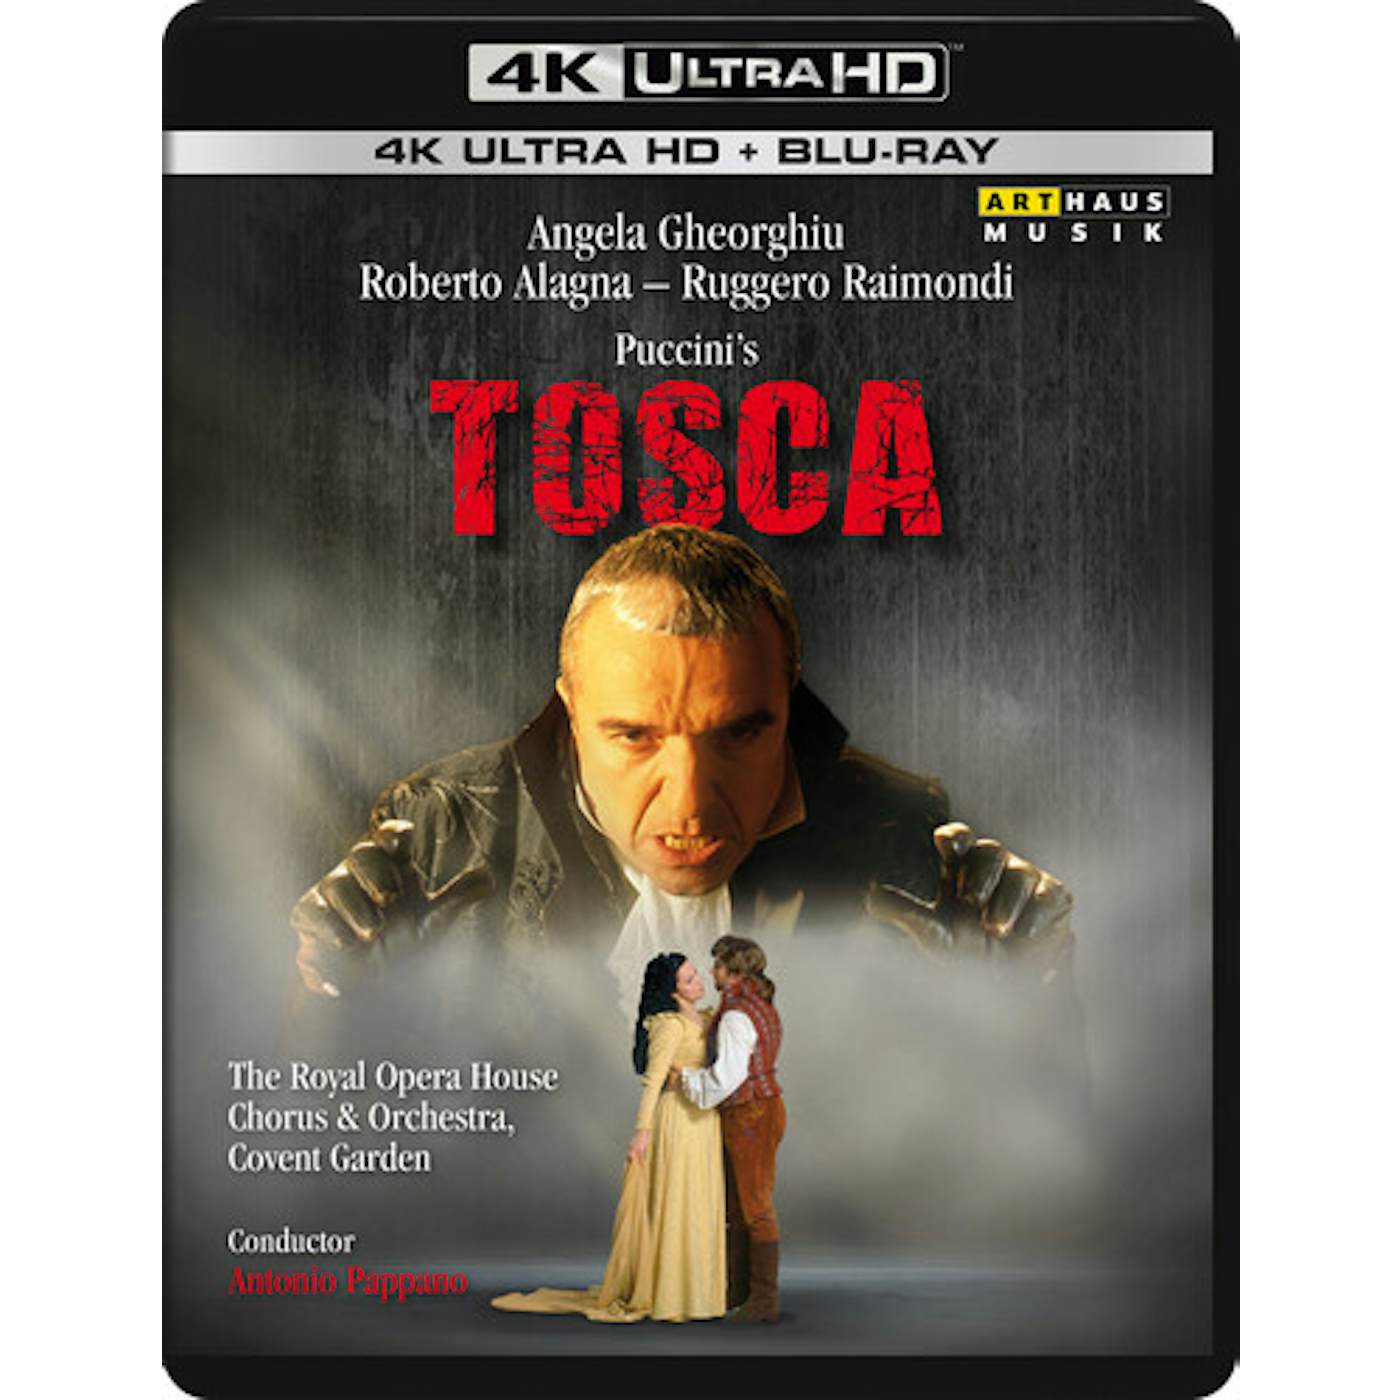 TOSCA Blu-ray